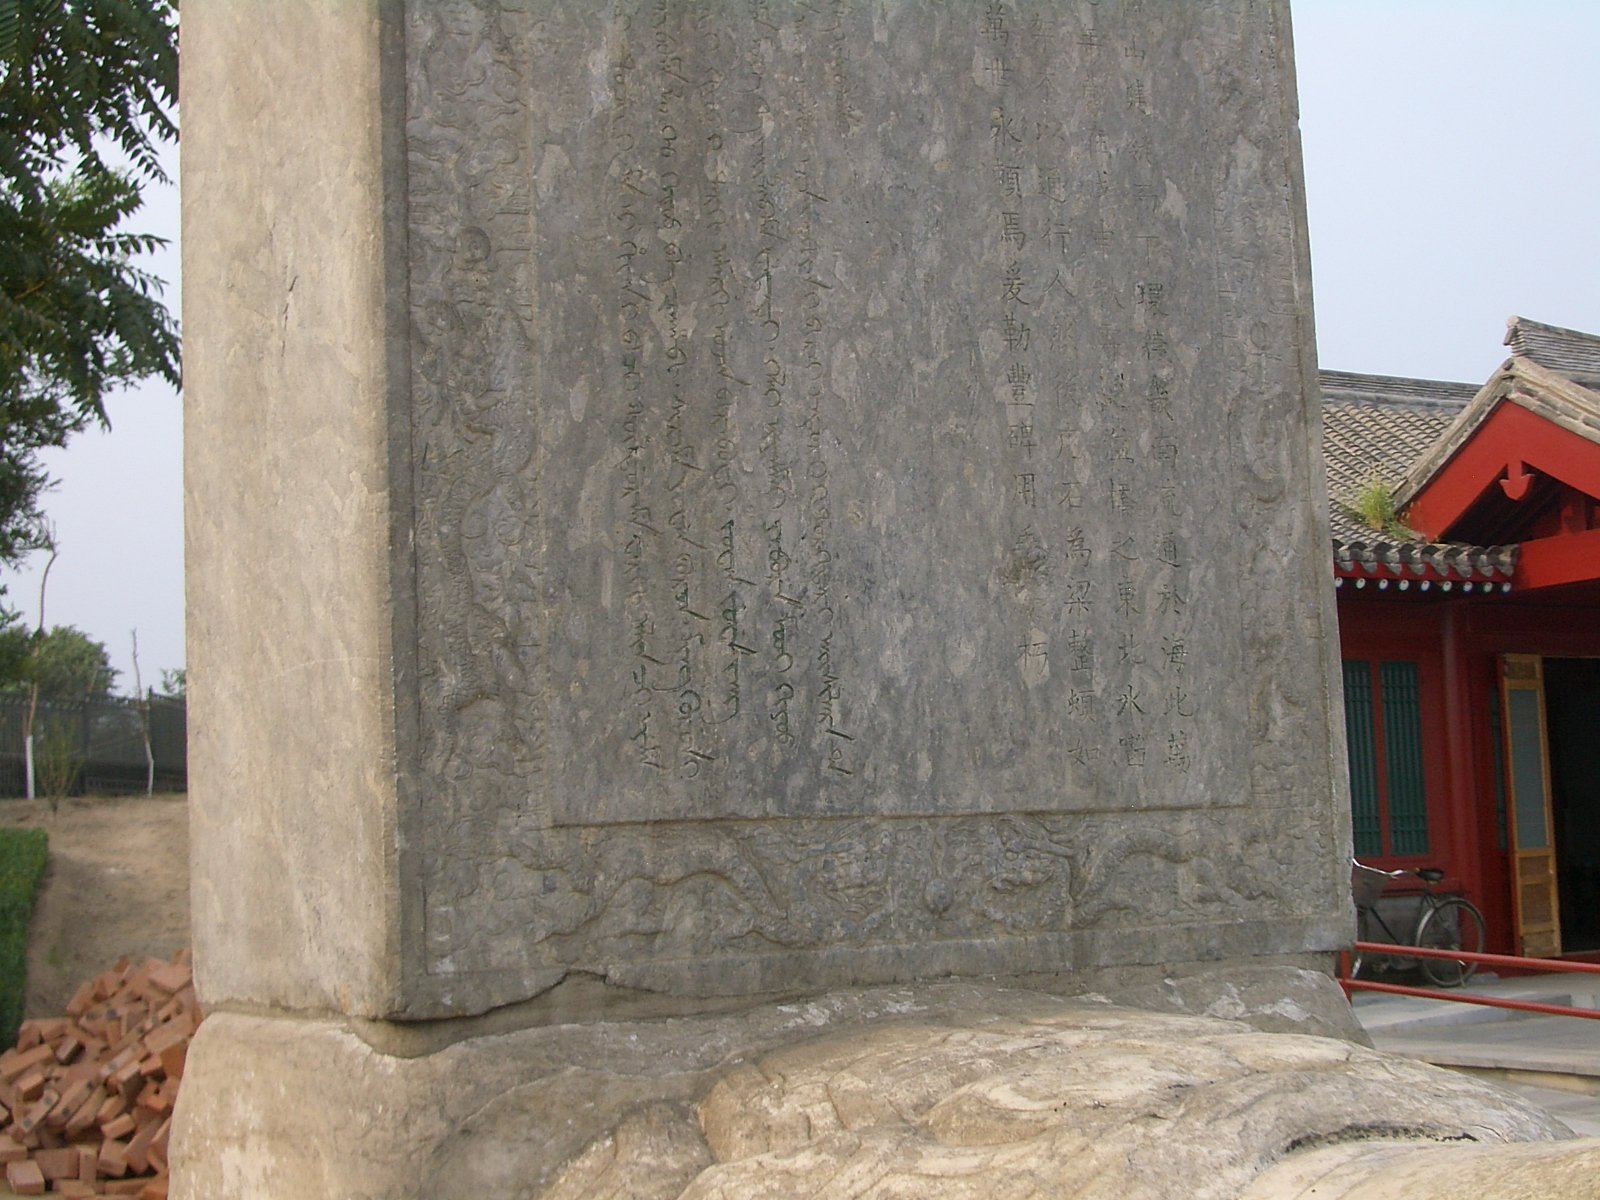 Photo of Kangxi Emperor stele by Vmenkov